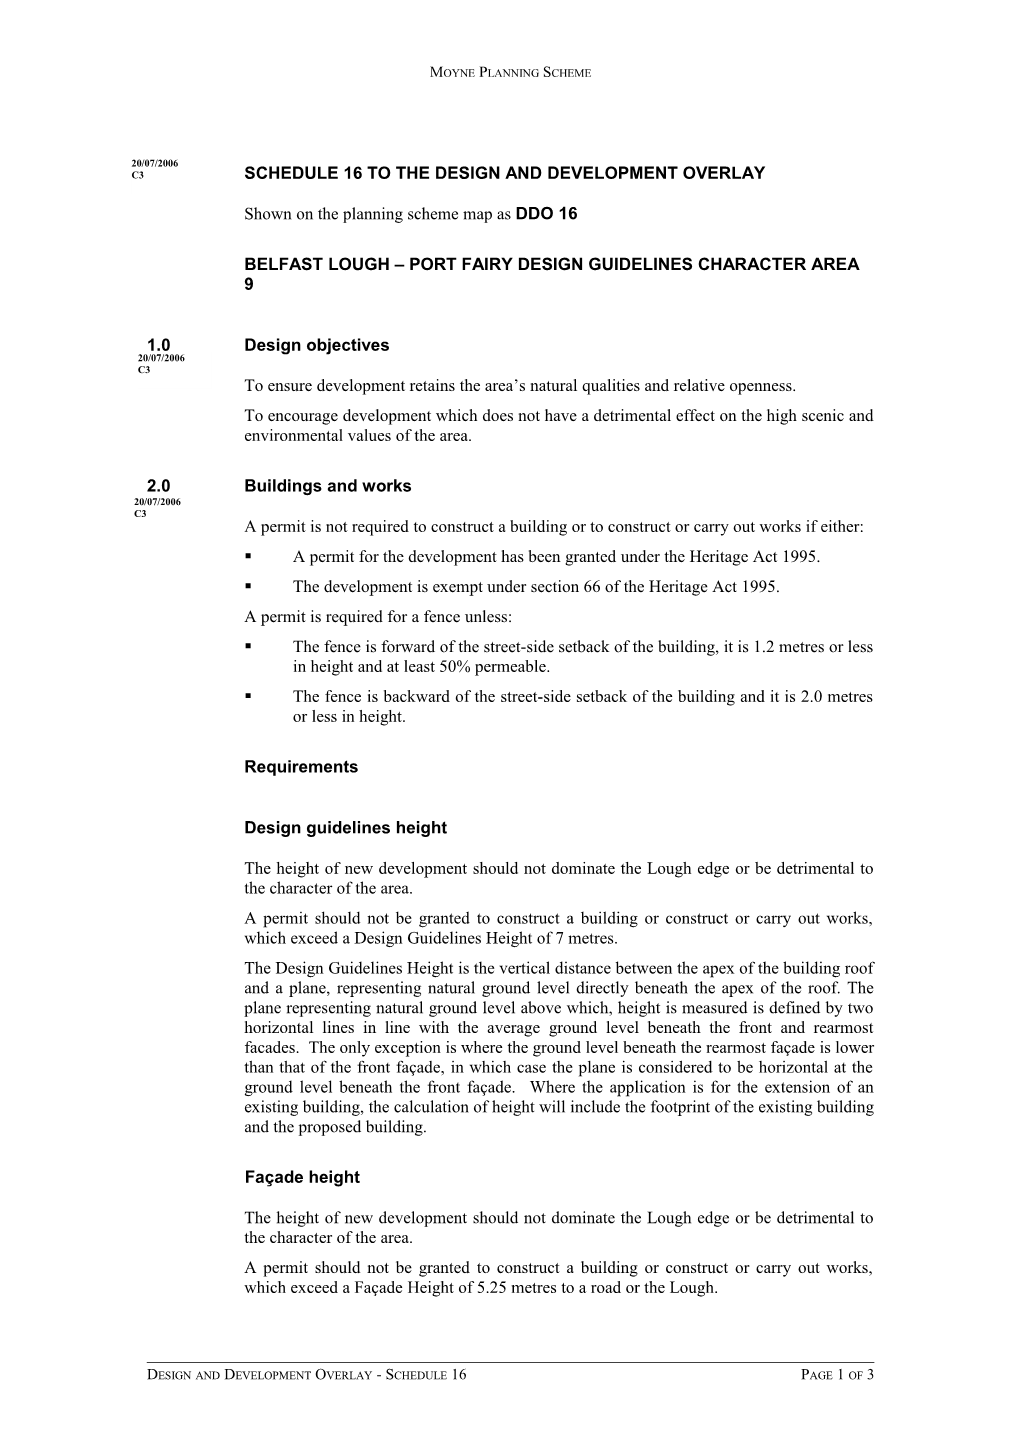 Belfast Lough Port Fairy Design Guidelines Character Area 9